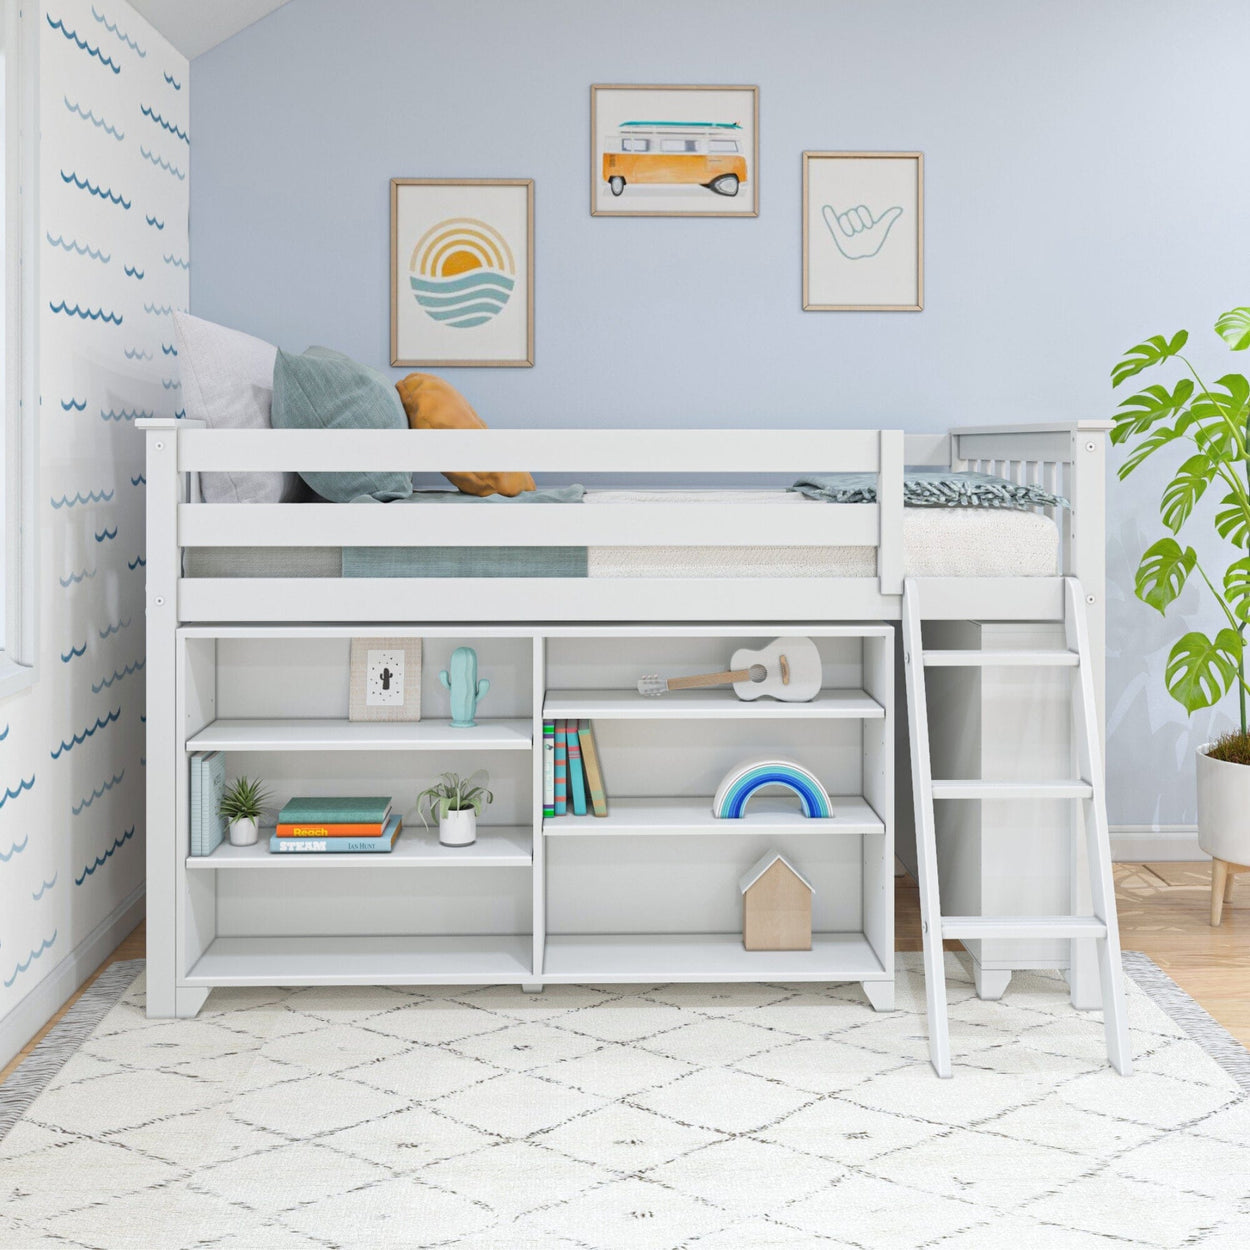 18-3B6B-002 : Loft Beds Twin-Size Low Loft with 3-Shelf Bookcase and 6-Shelf Bookcase, White